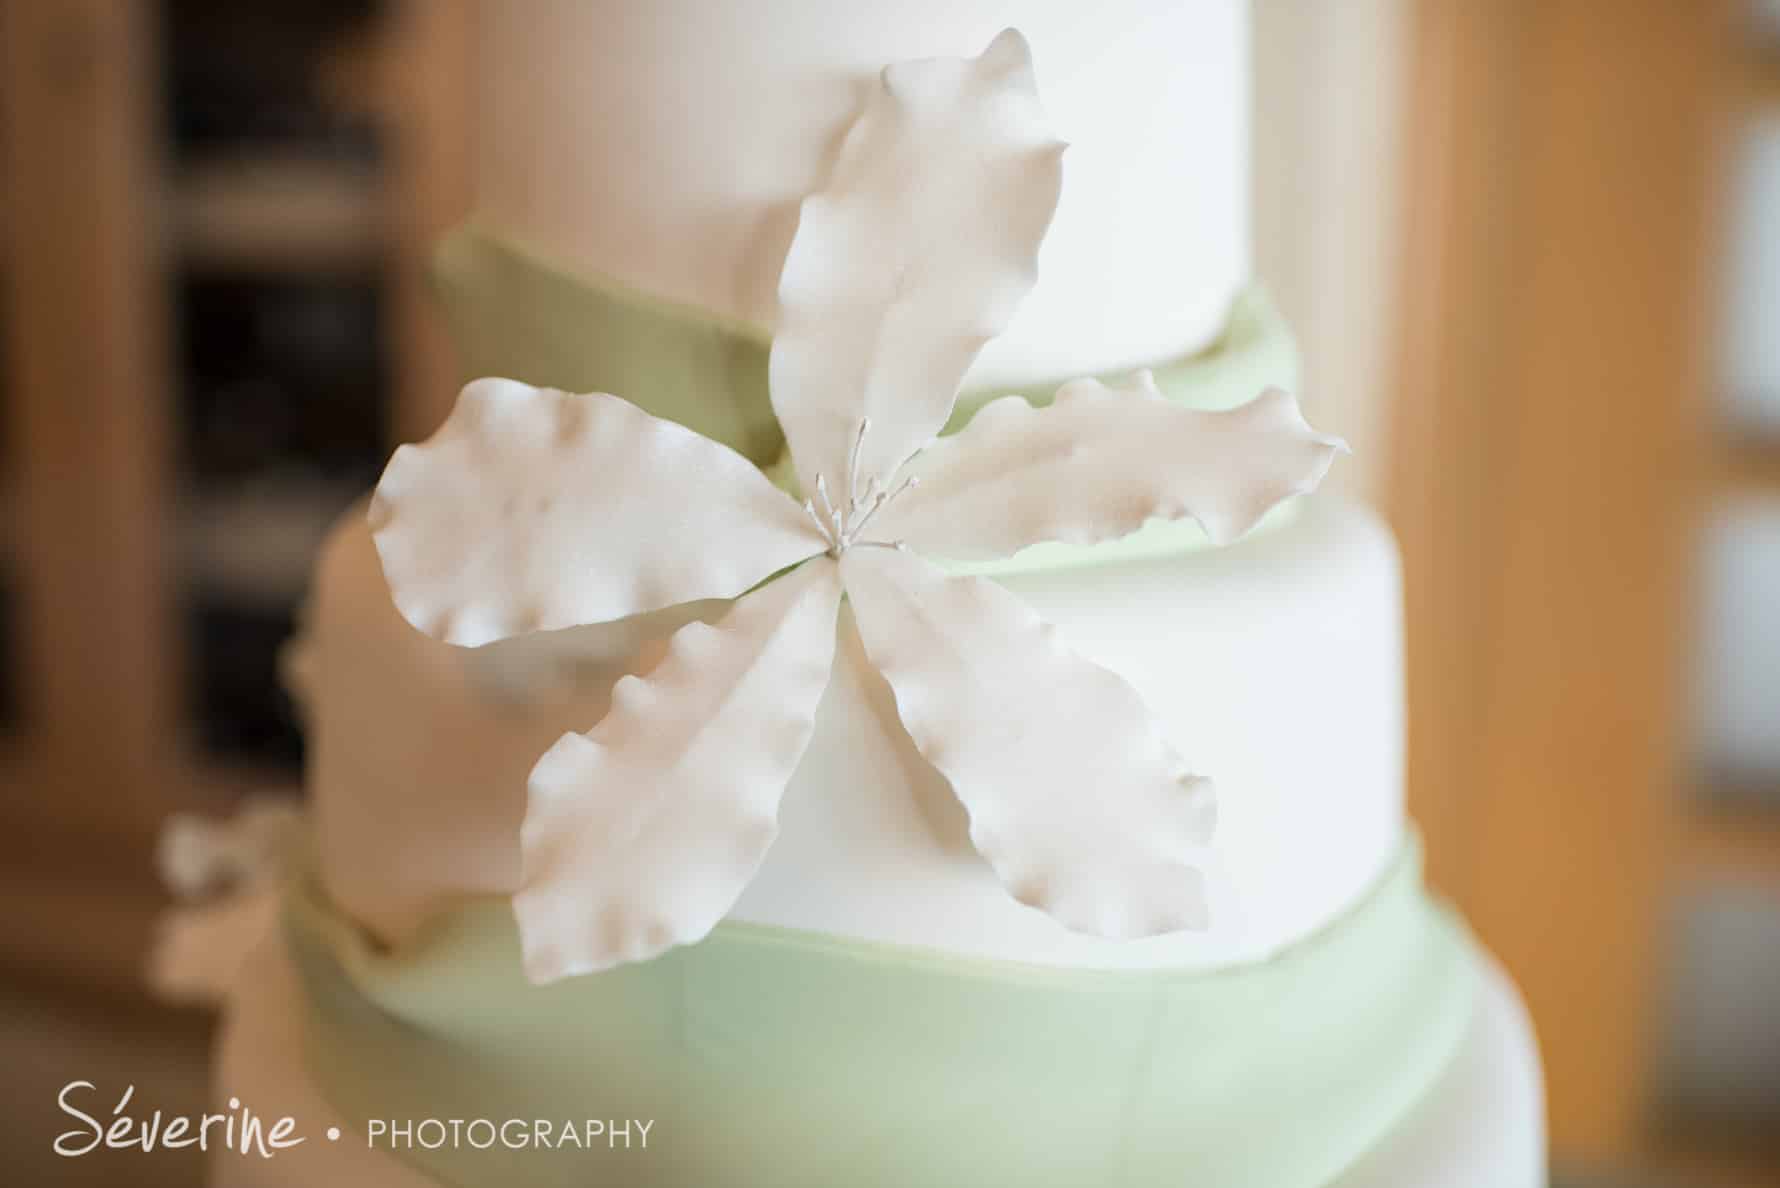 White and teal wedding cake